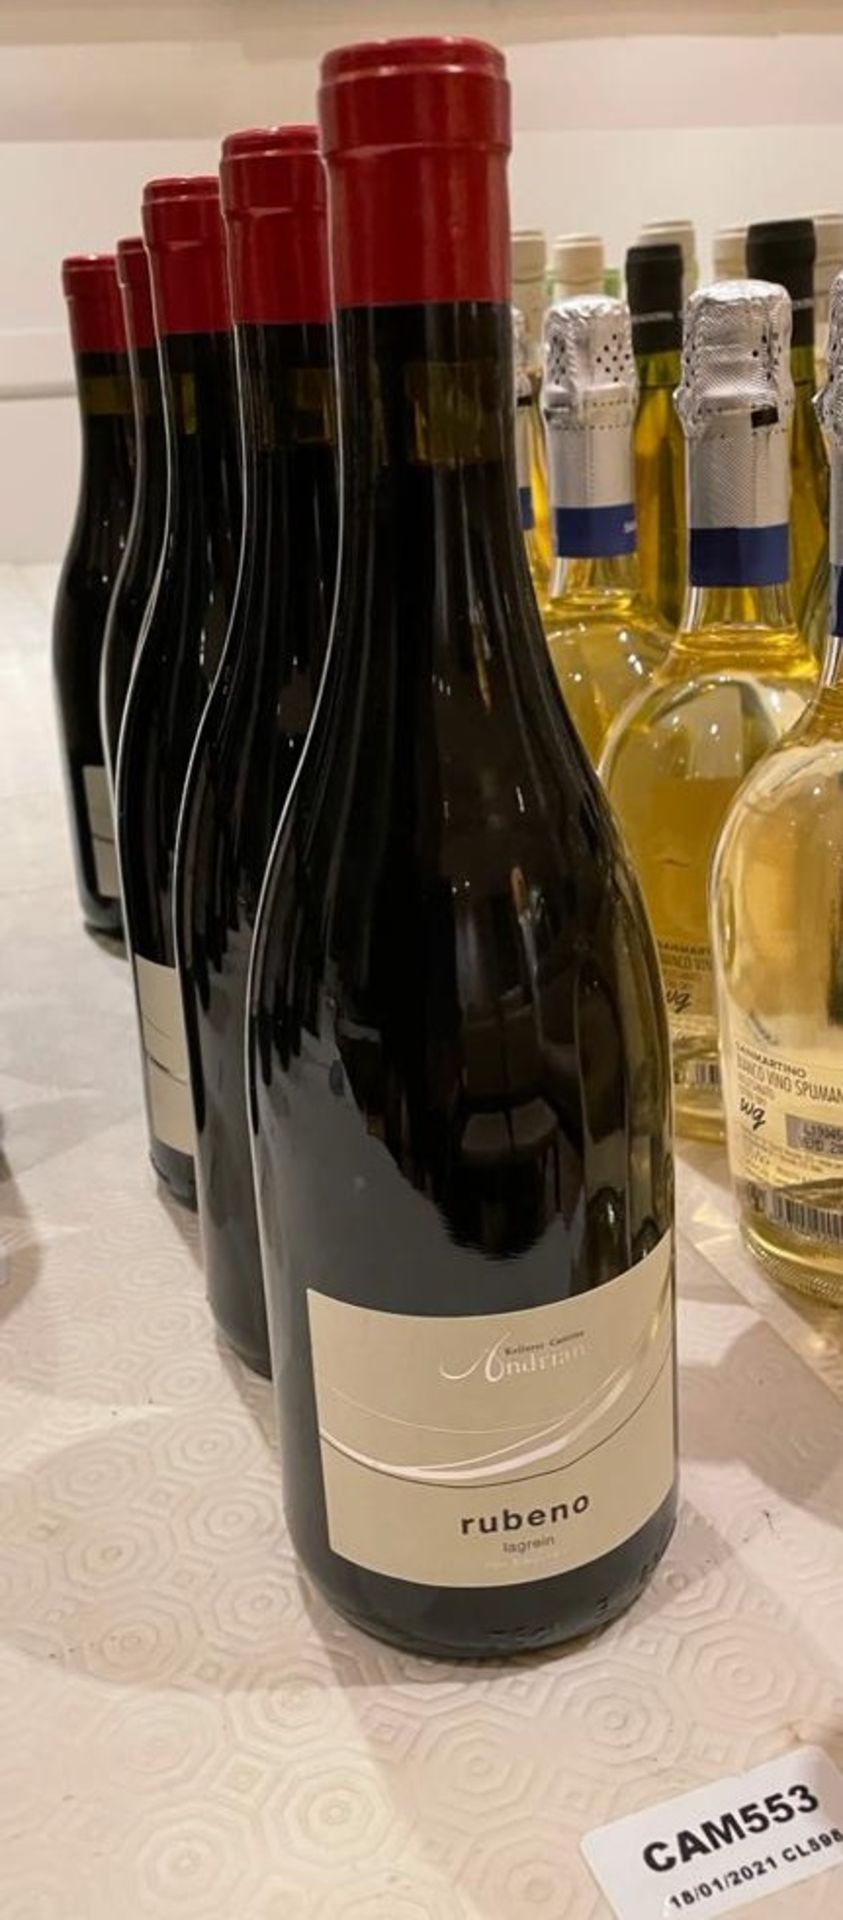 6 x Bottles Of RUBENO LAGRIEN - New/Unopened Restaurant Stock - 2019 - 0.75l - Ref: CAM553 - CL612 - Image 2 of 3